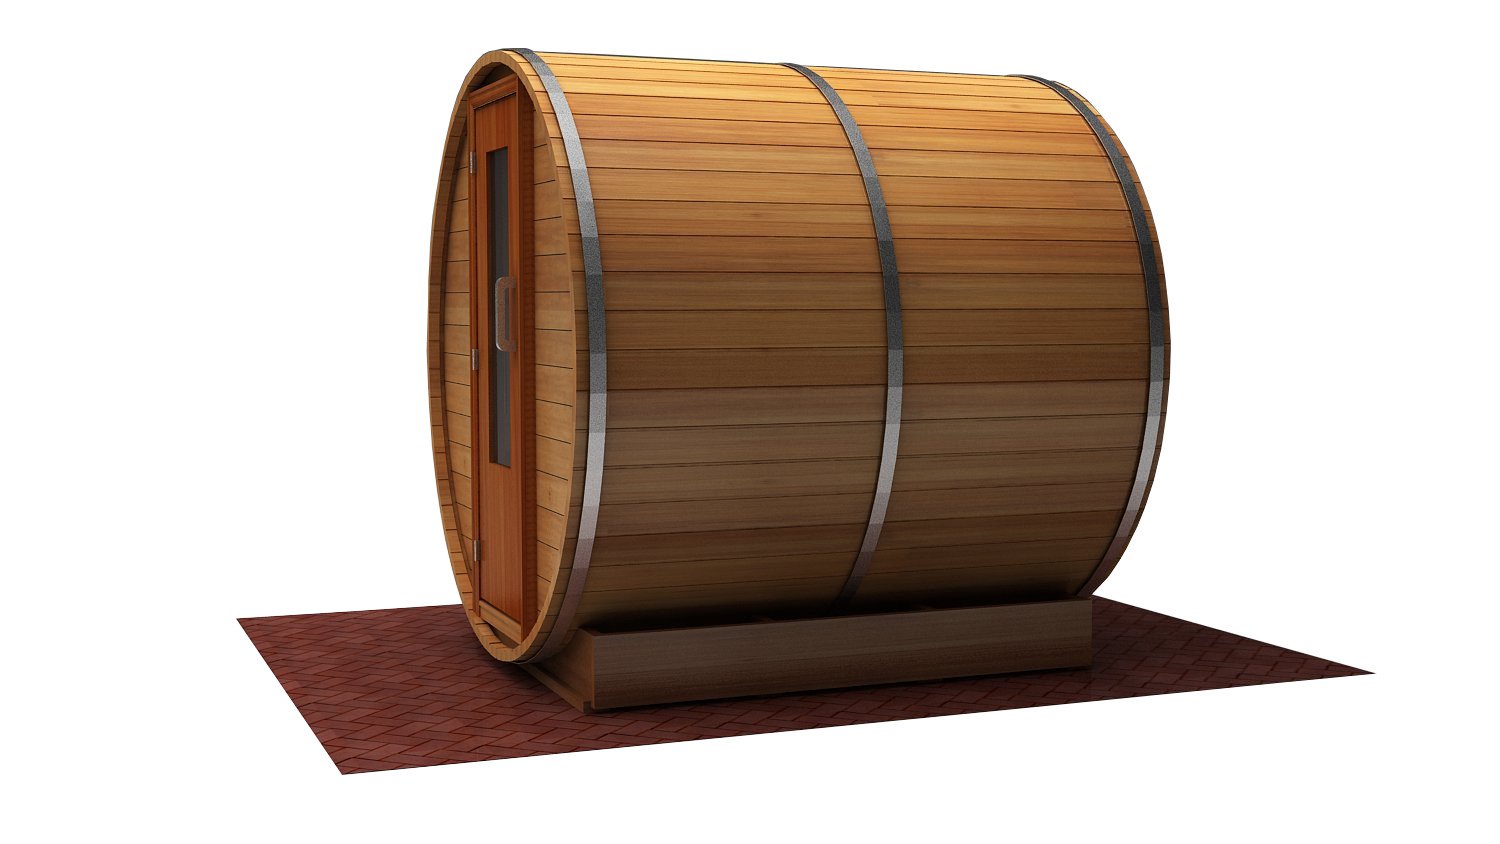 Barrel Sauna Kit - Outdoor Barrel Sauna Room 7' x 7' - Electric Heater